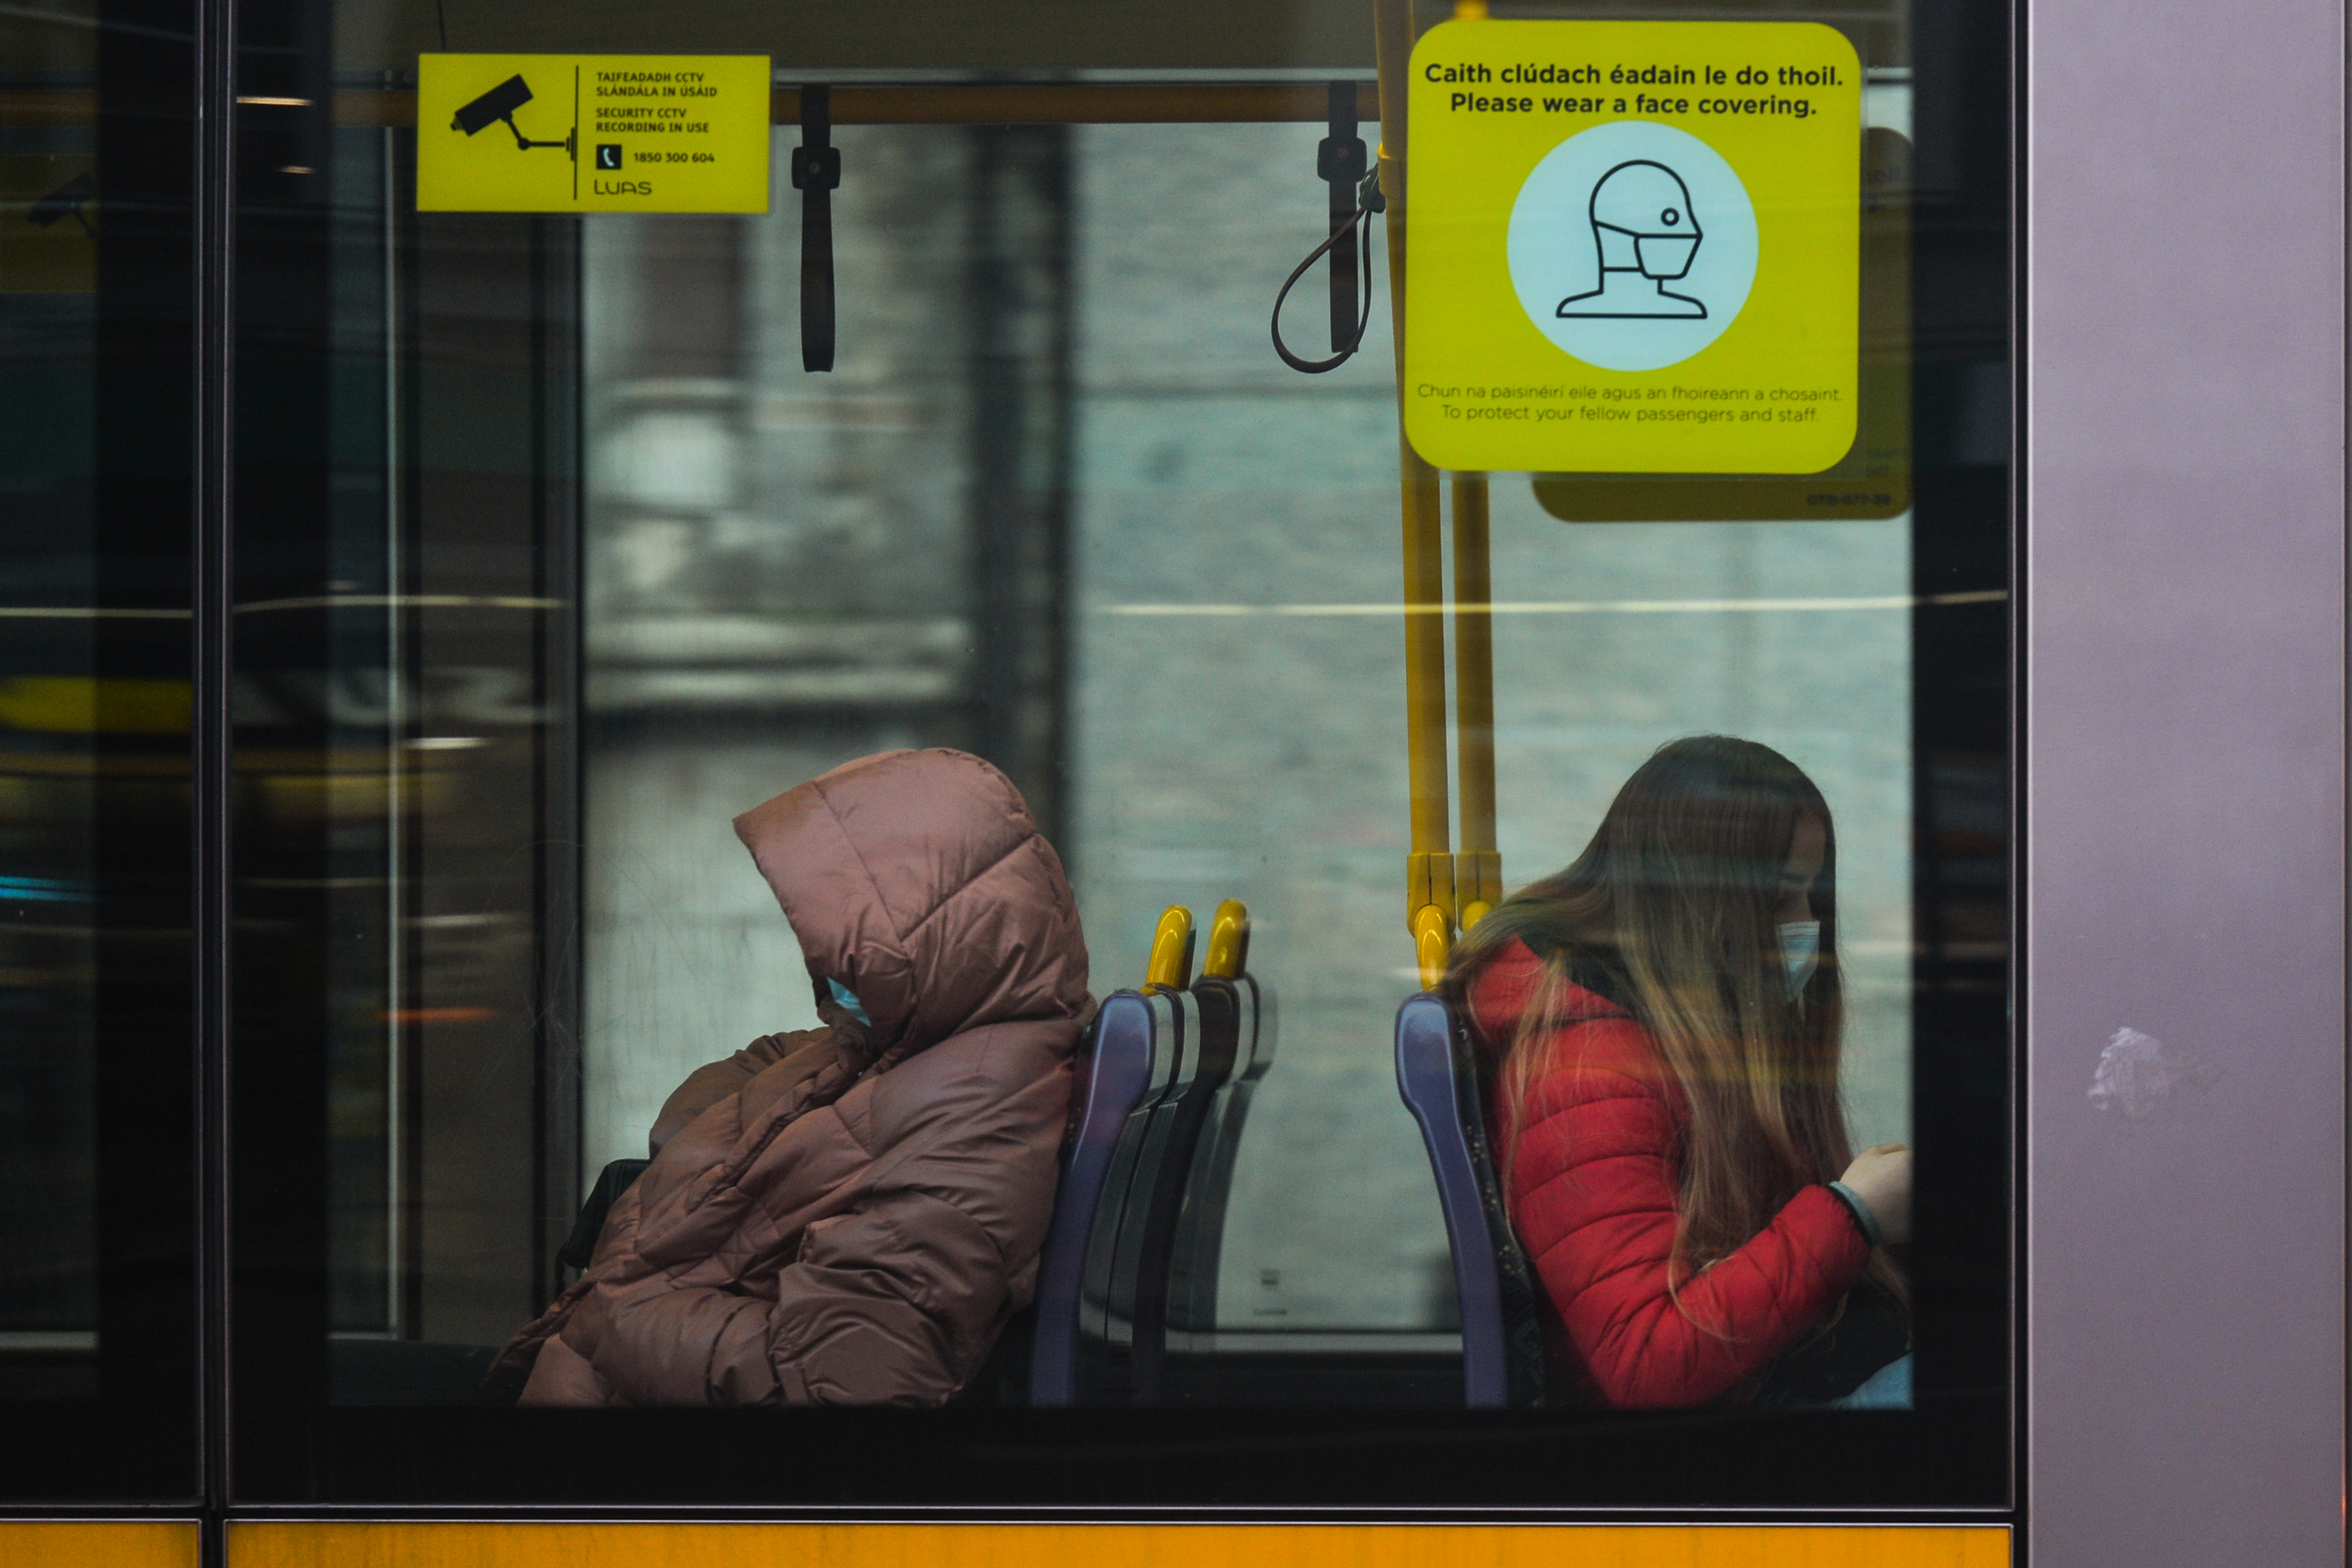 People wearing face masks are seen inside a tram in Dublin, Ireland on January 6.